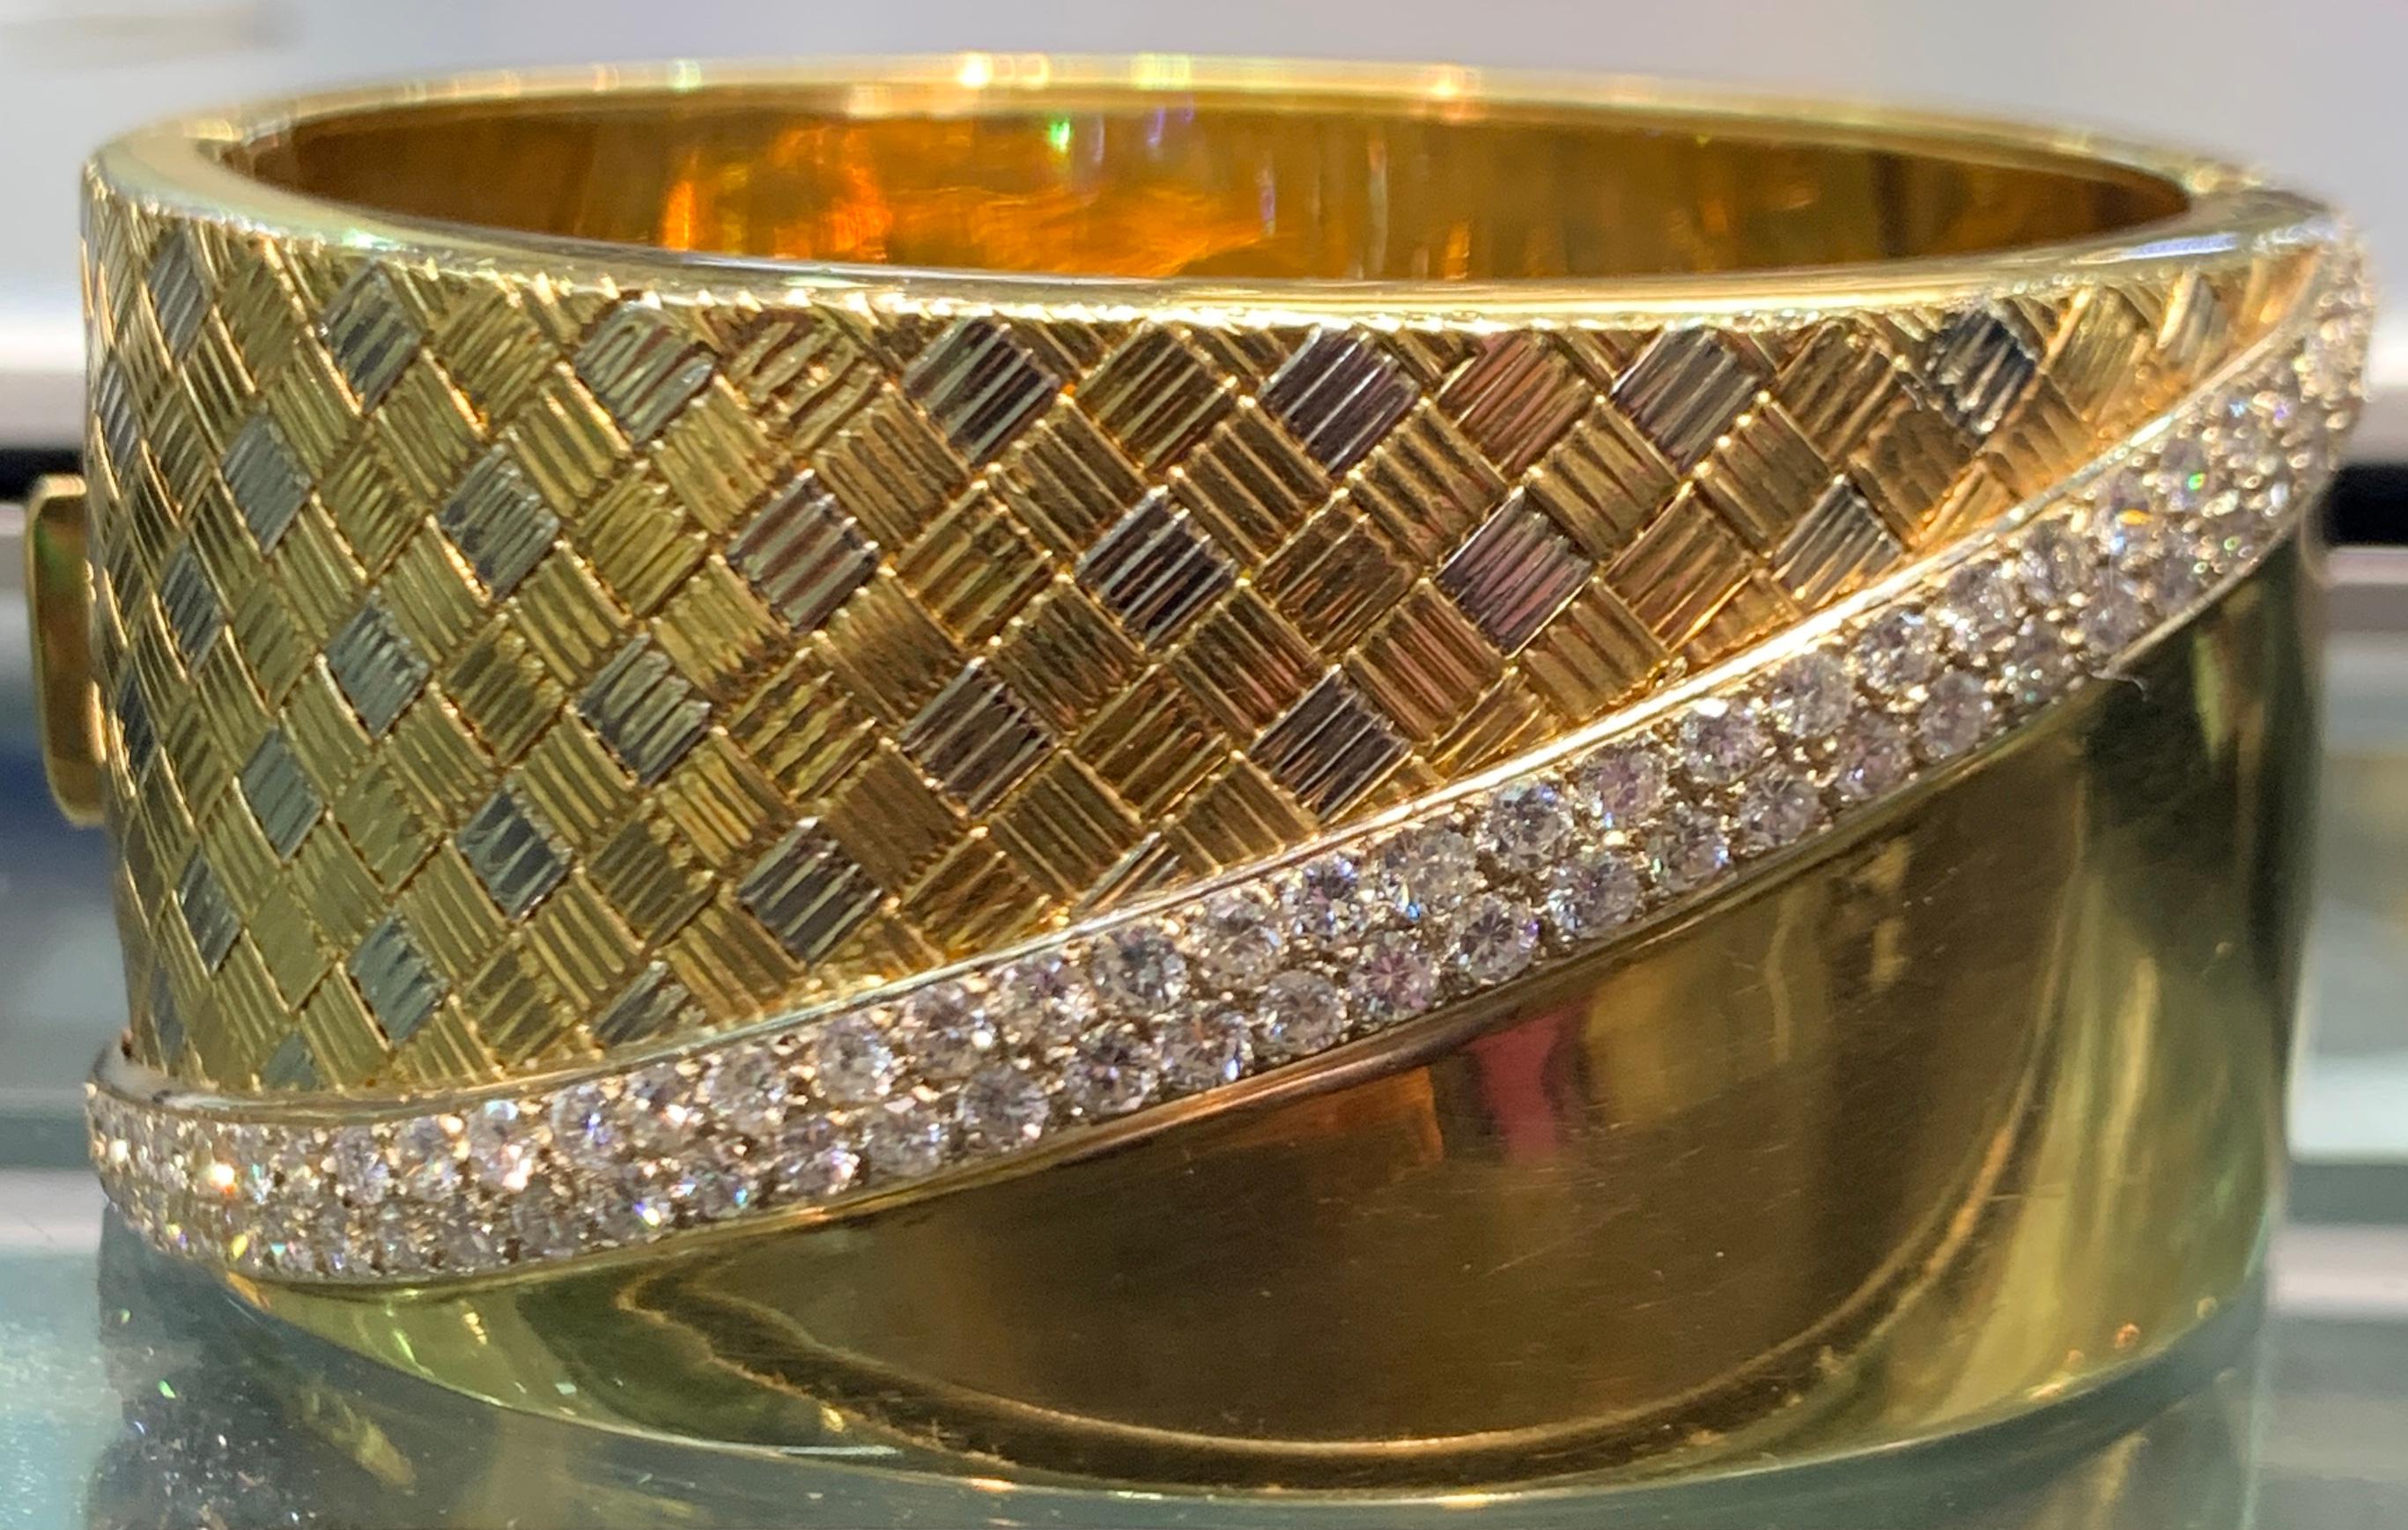 Diamond & Gold Bangle Cuff Bracelet
Gold Type:
74 diamonds total 
Diamond Weight: 3.70 Cts
78 grams
Measurements: diameter: 2.25